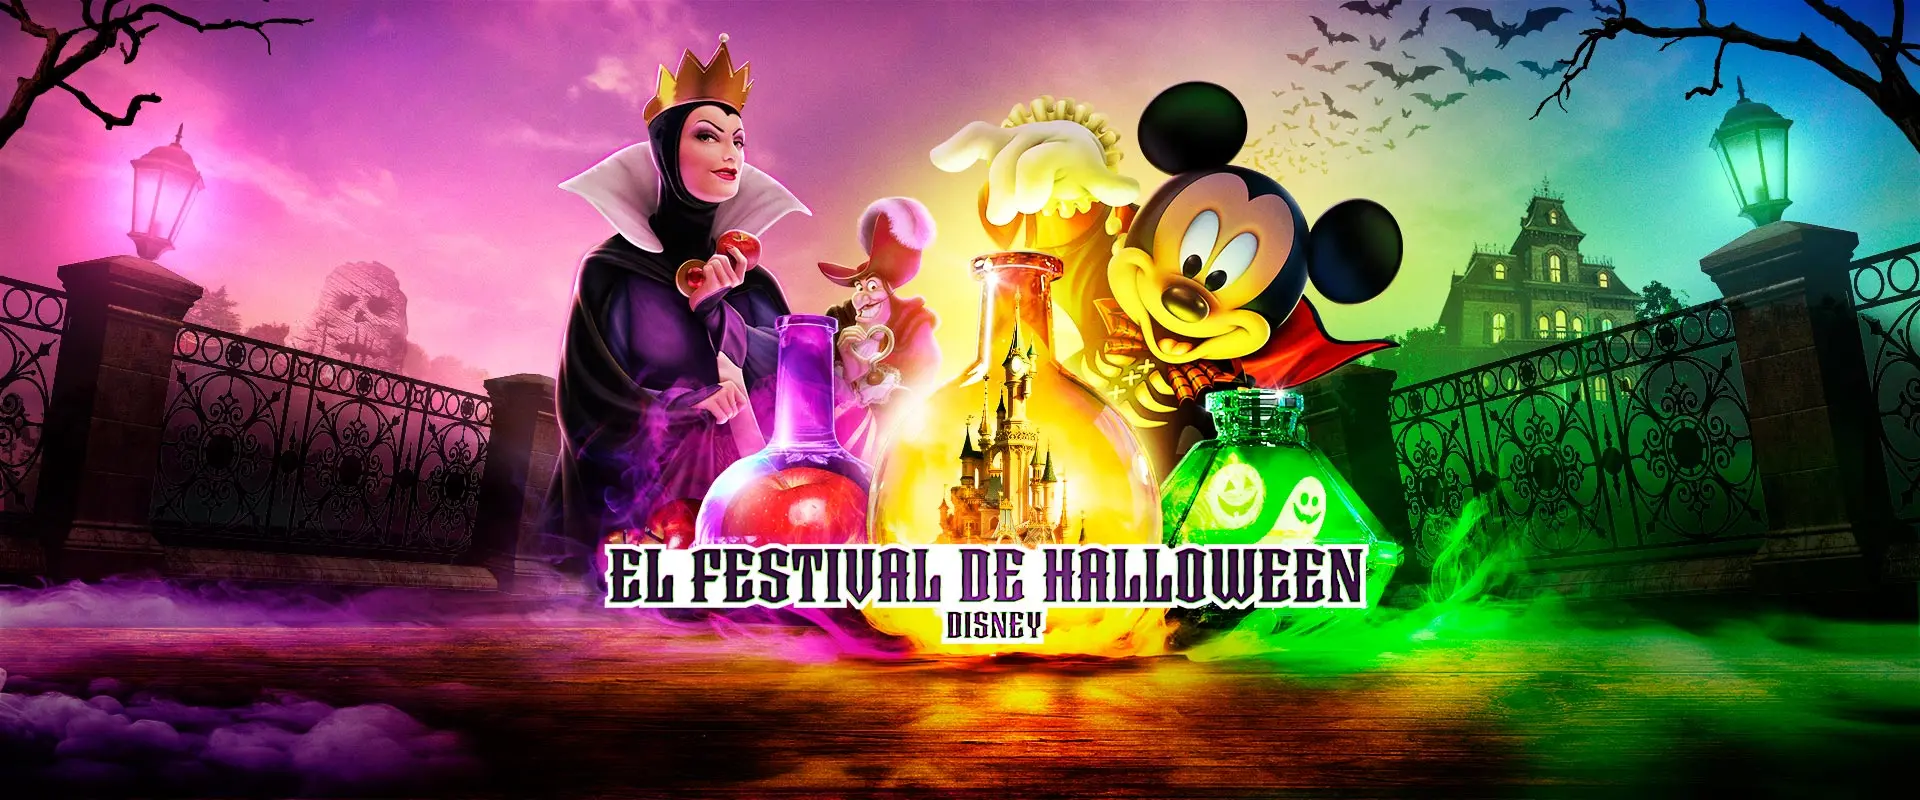 El Festival de Halloween Disney Disneyland Paris